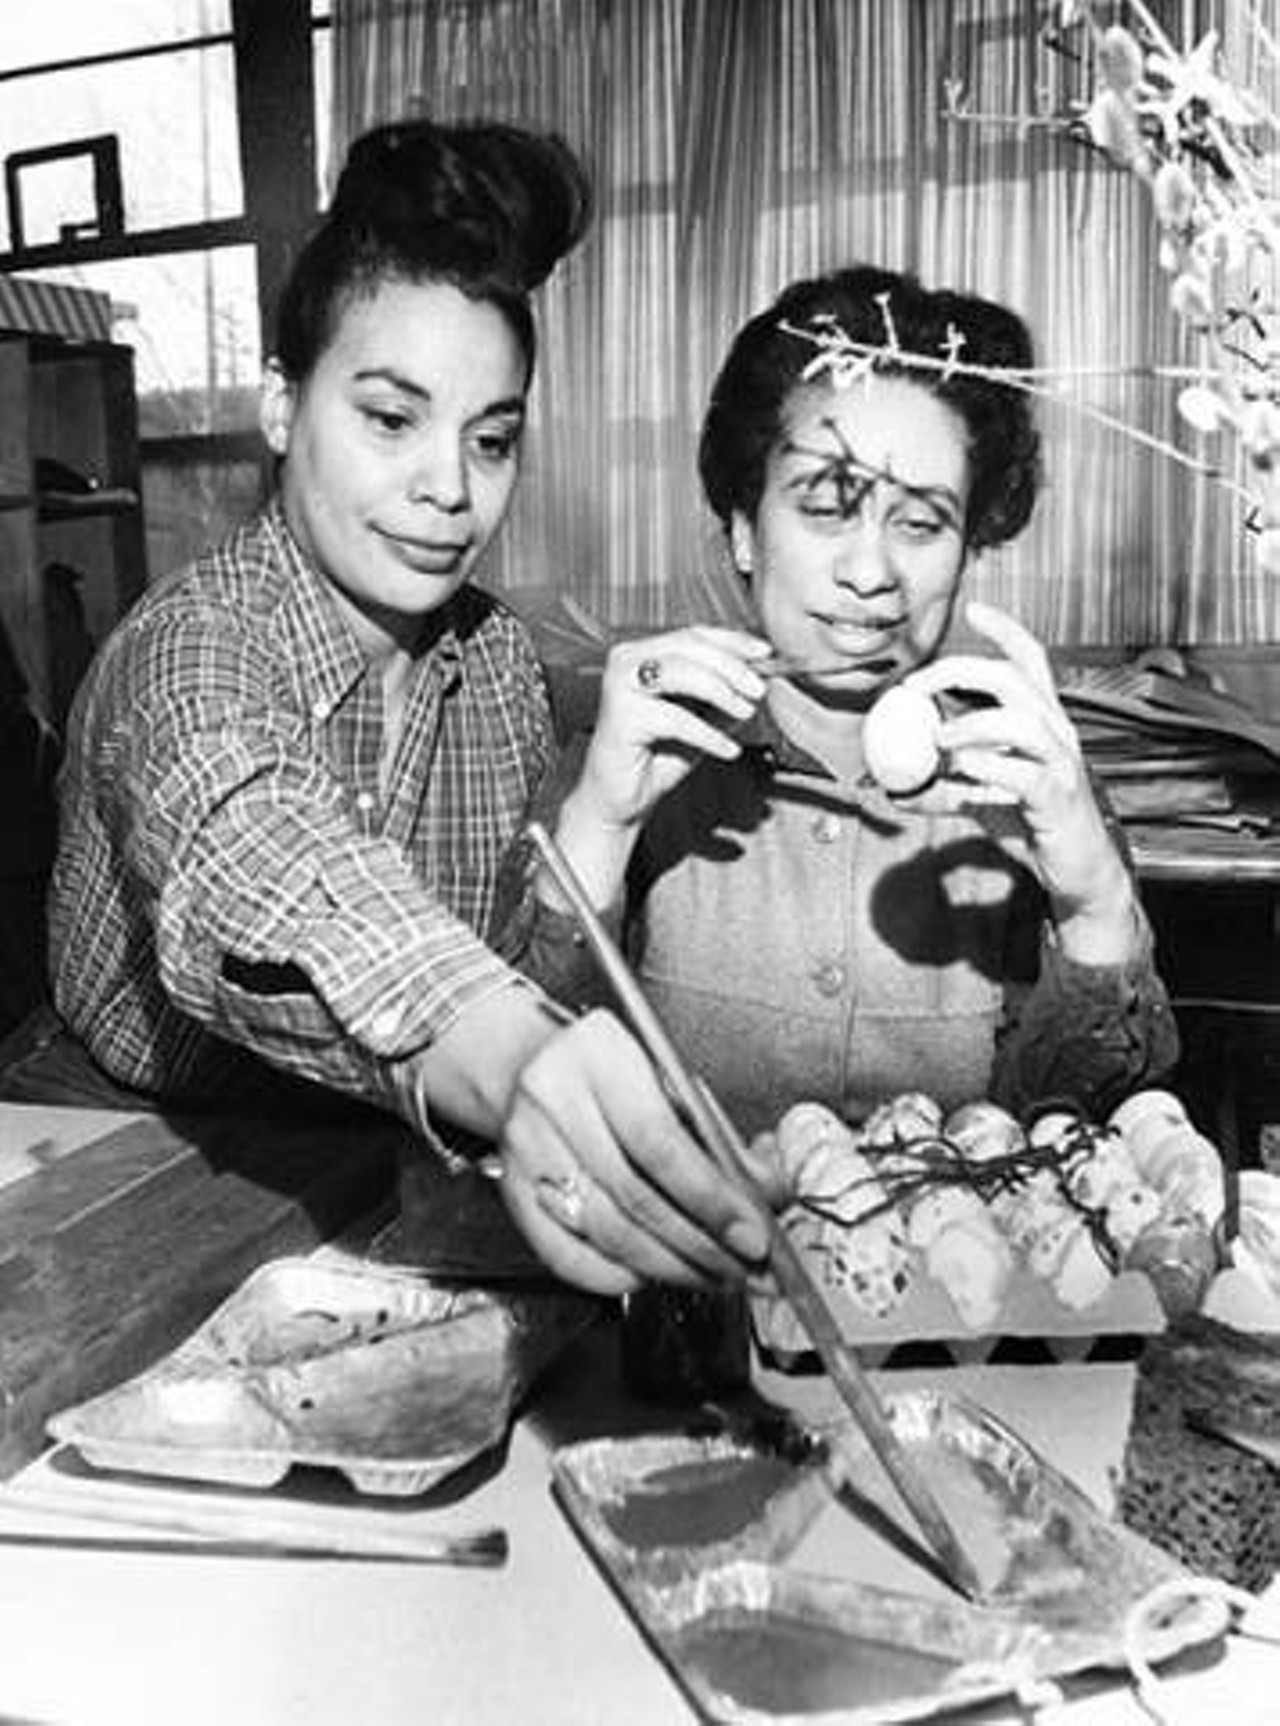 Cecil Rutledge and Mrs. Jane Dawson decorating Easter eggs at Karamu House Nursery School. 1965